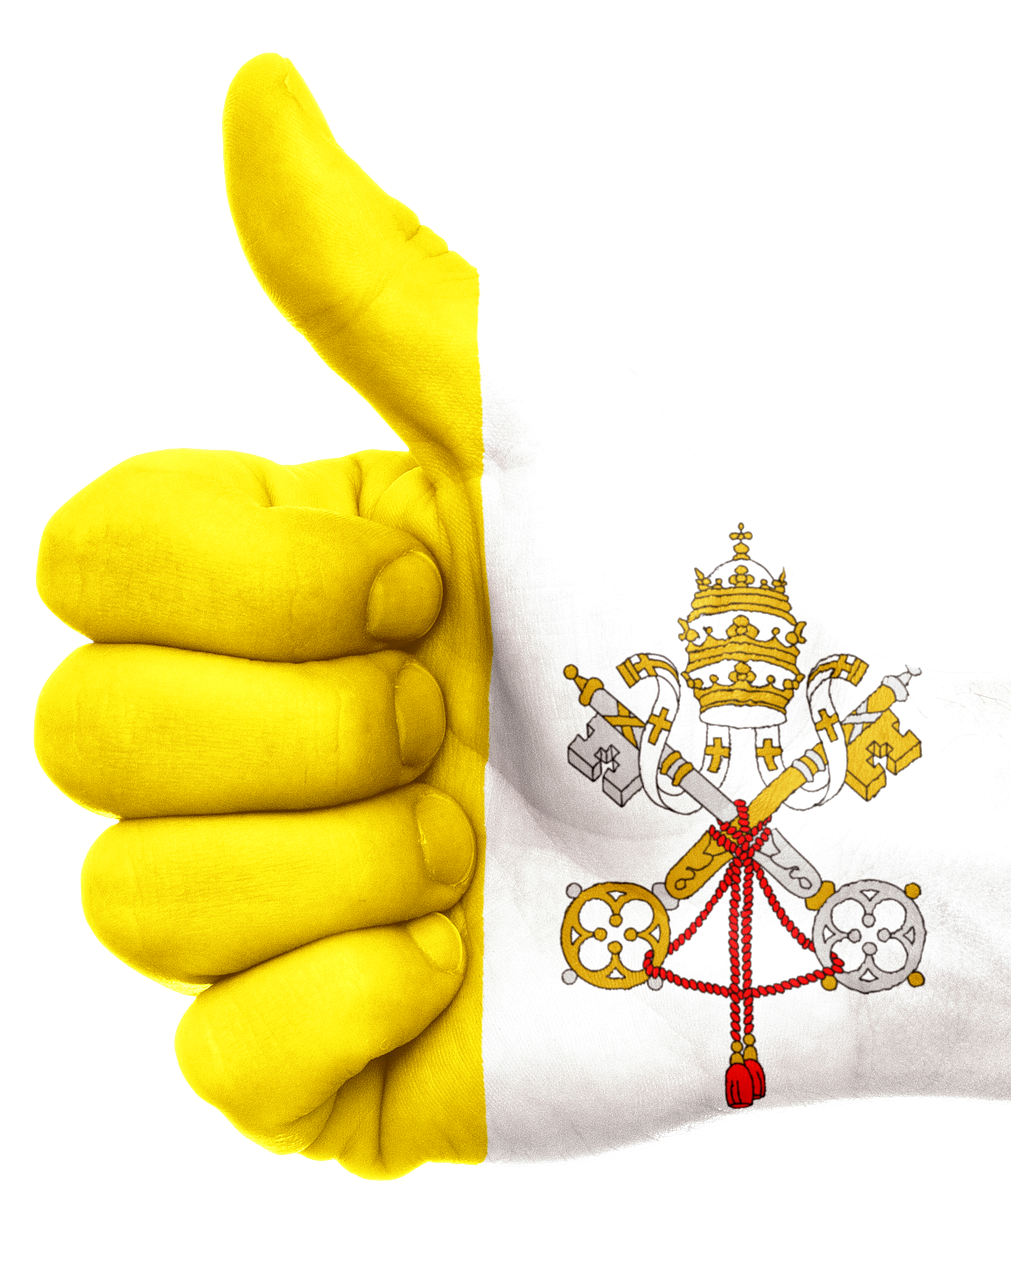 vatican flag hand free photo